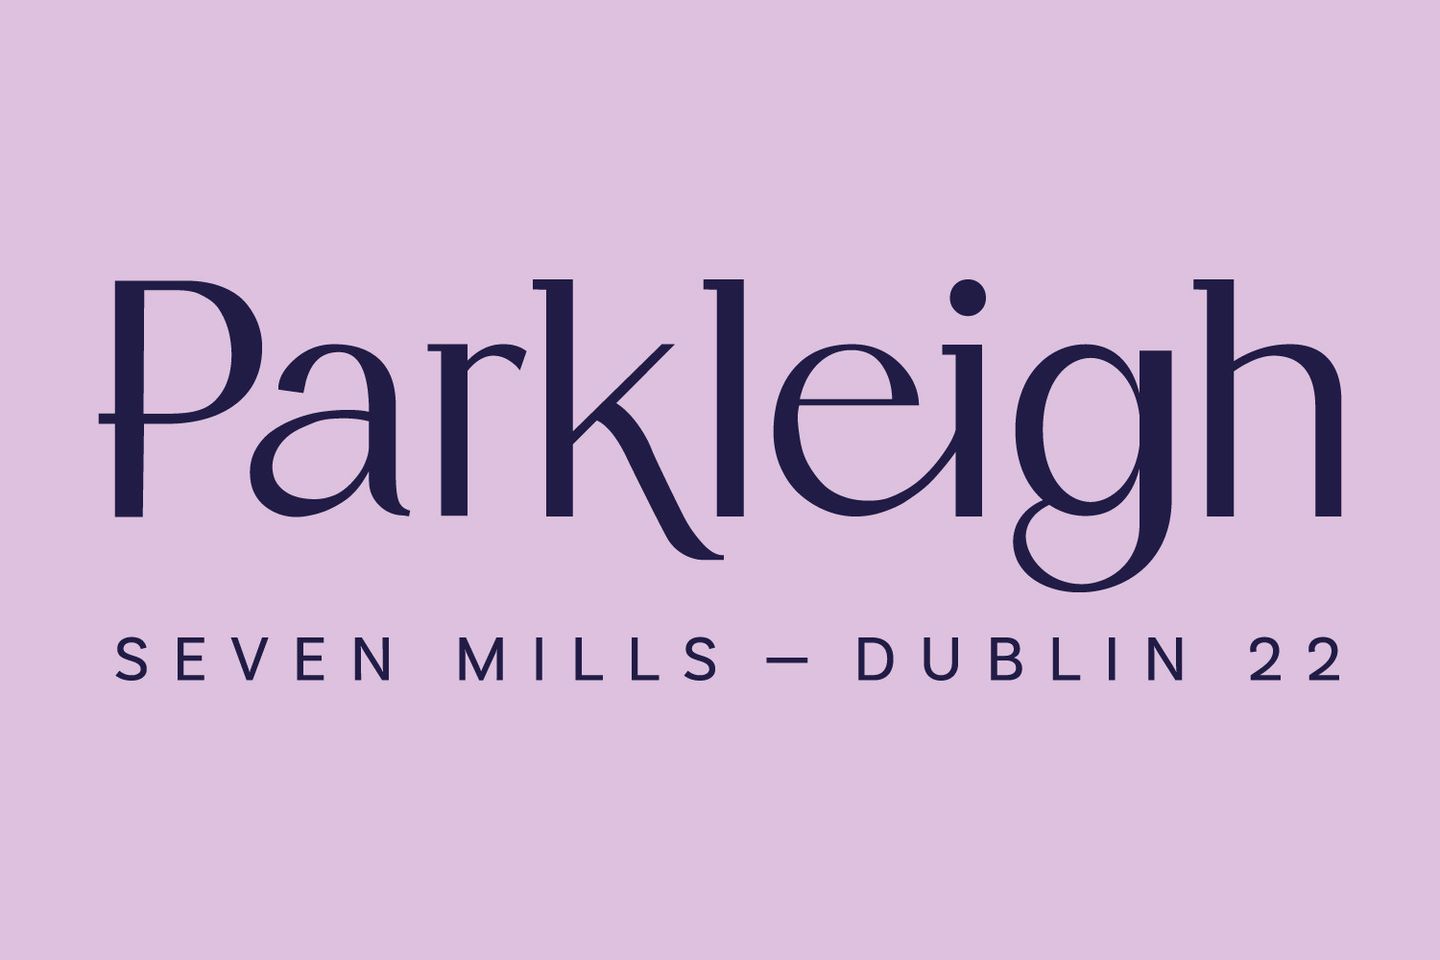 4 Bedroom Semi-Detached House, Parkleigh, Seven Mills, Parkleigh, Seven Mills, Dublin 22